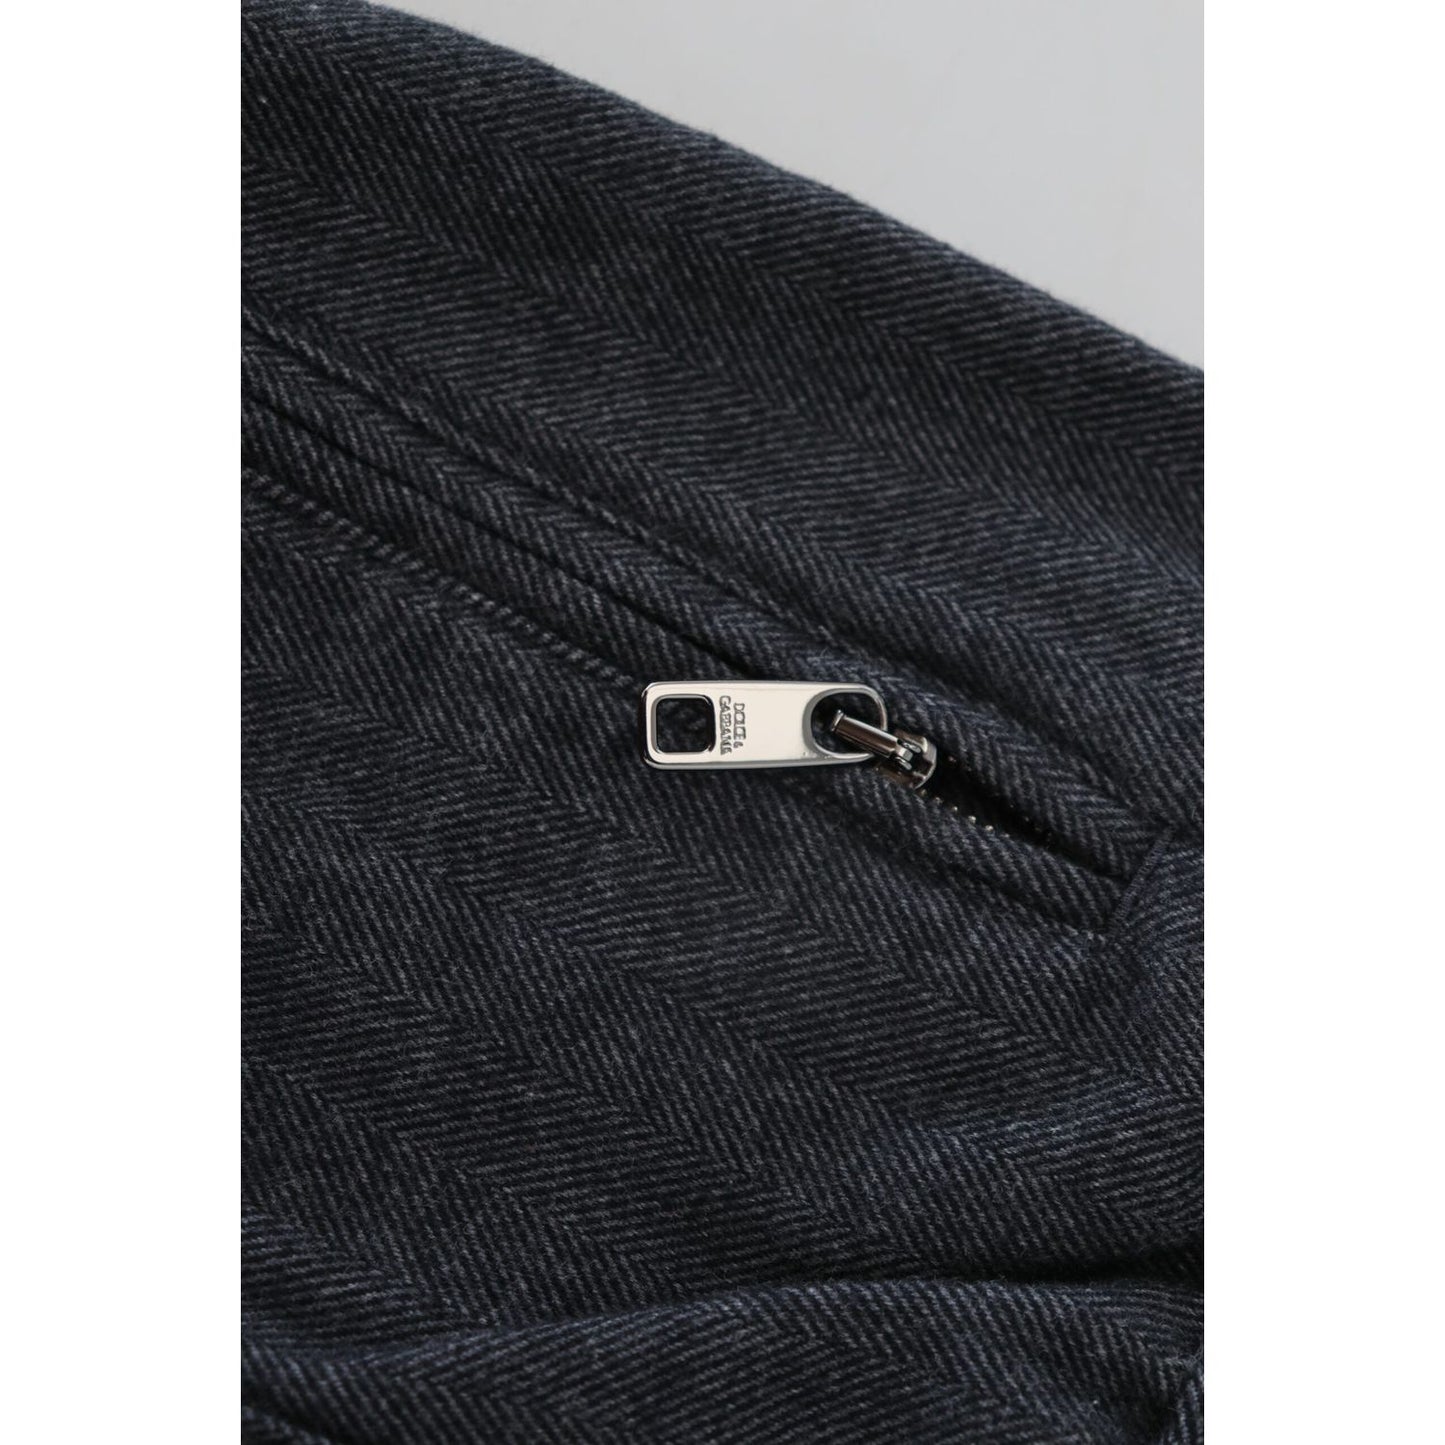 Dolce & Gabbana Elegant Grey Cotton Joggers for Men gray-cotton-jogger-men-pants IMG_6729-scaled-53af749f-376.jpg